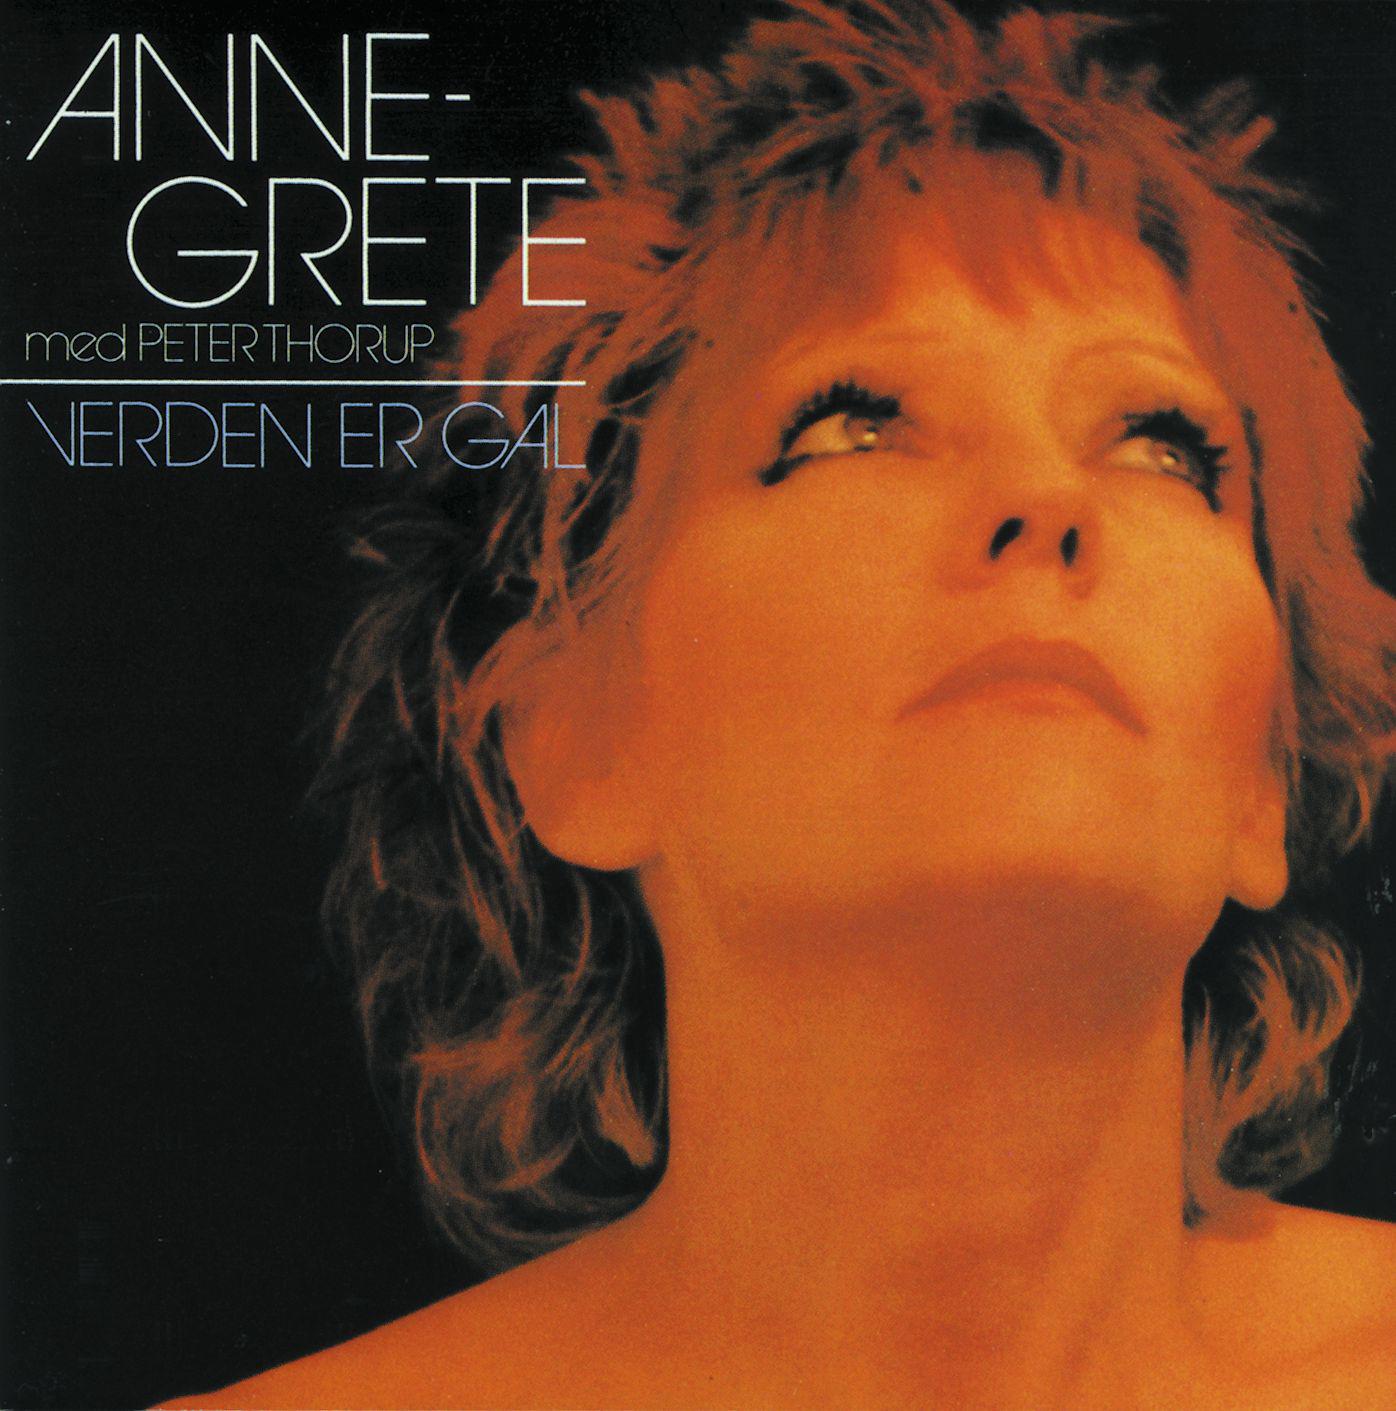 Anne Grete - Det jeg har (1998 Remastered Version)